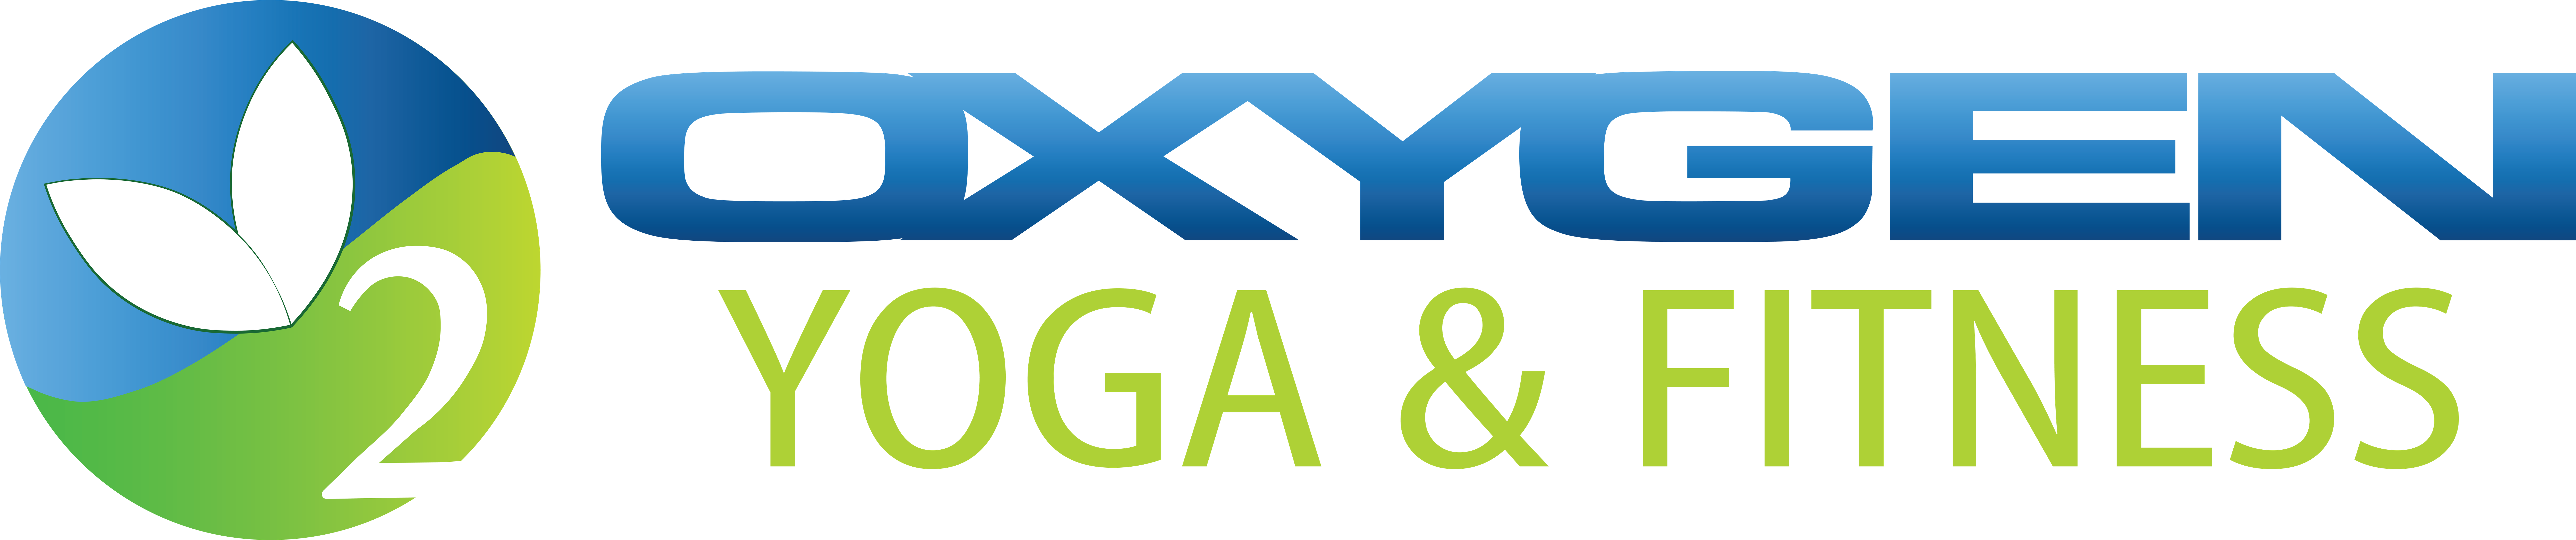 Oxygen Yoga & Fitness Logo